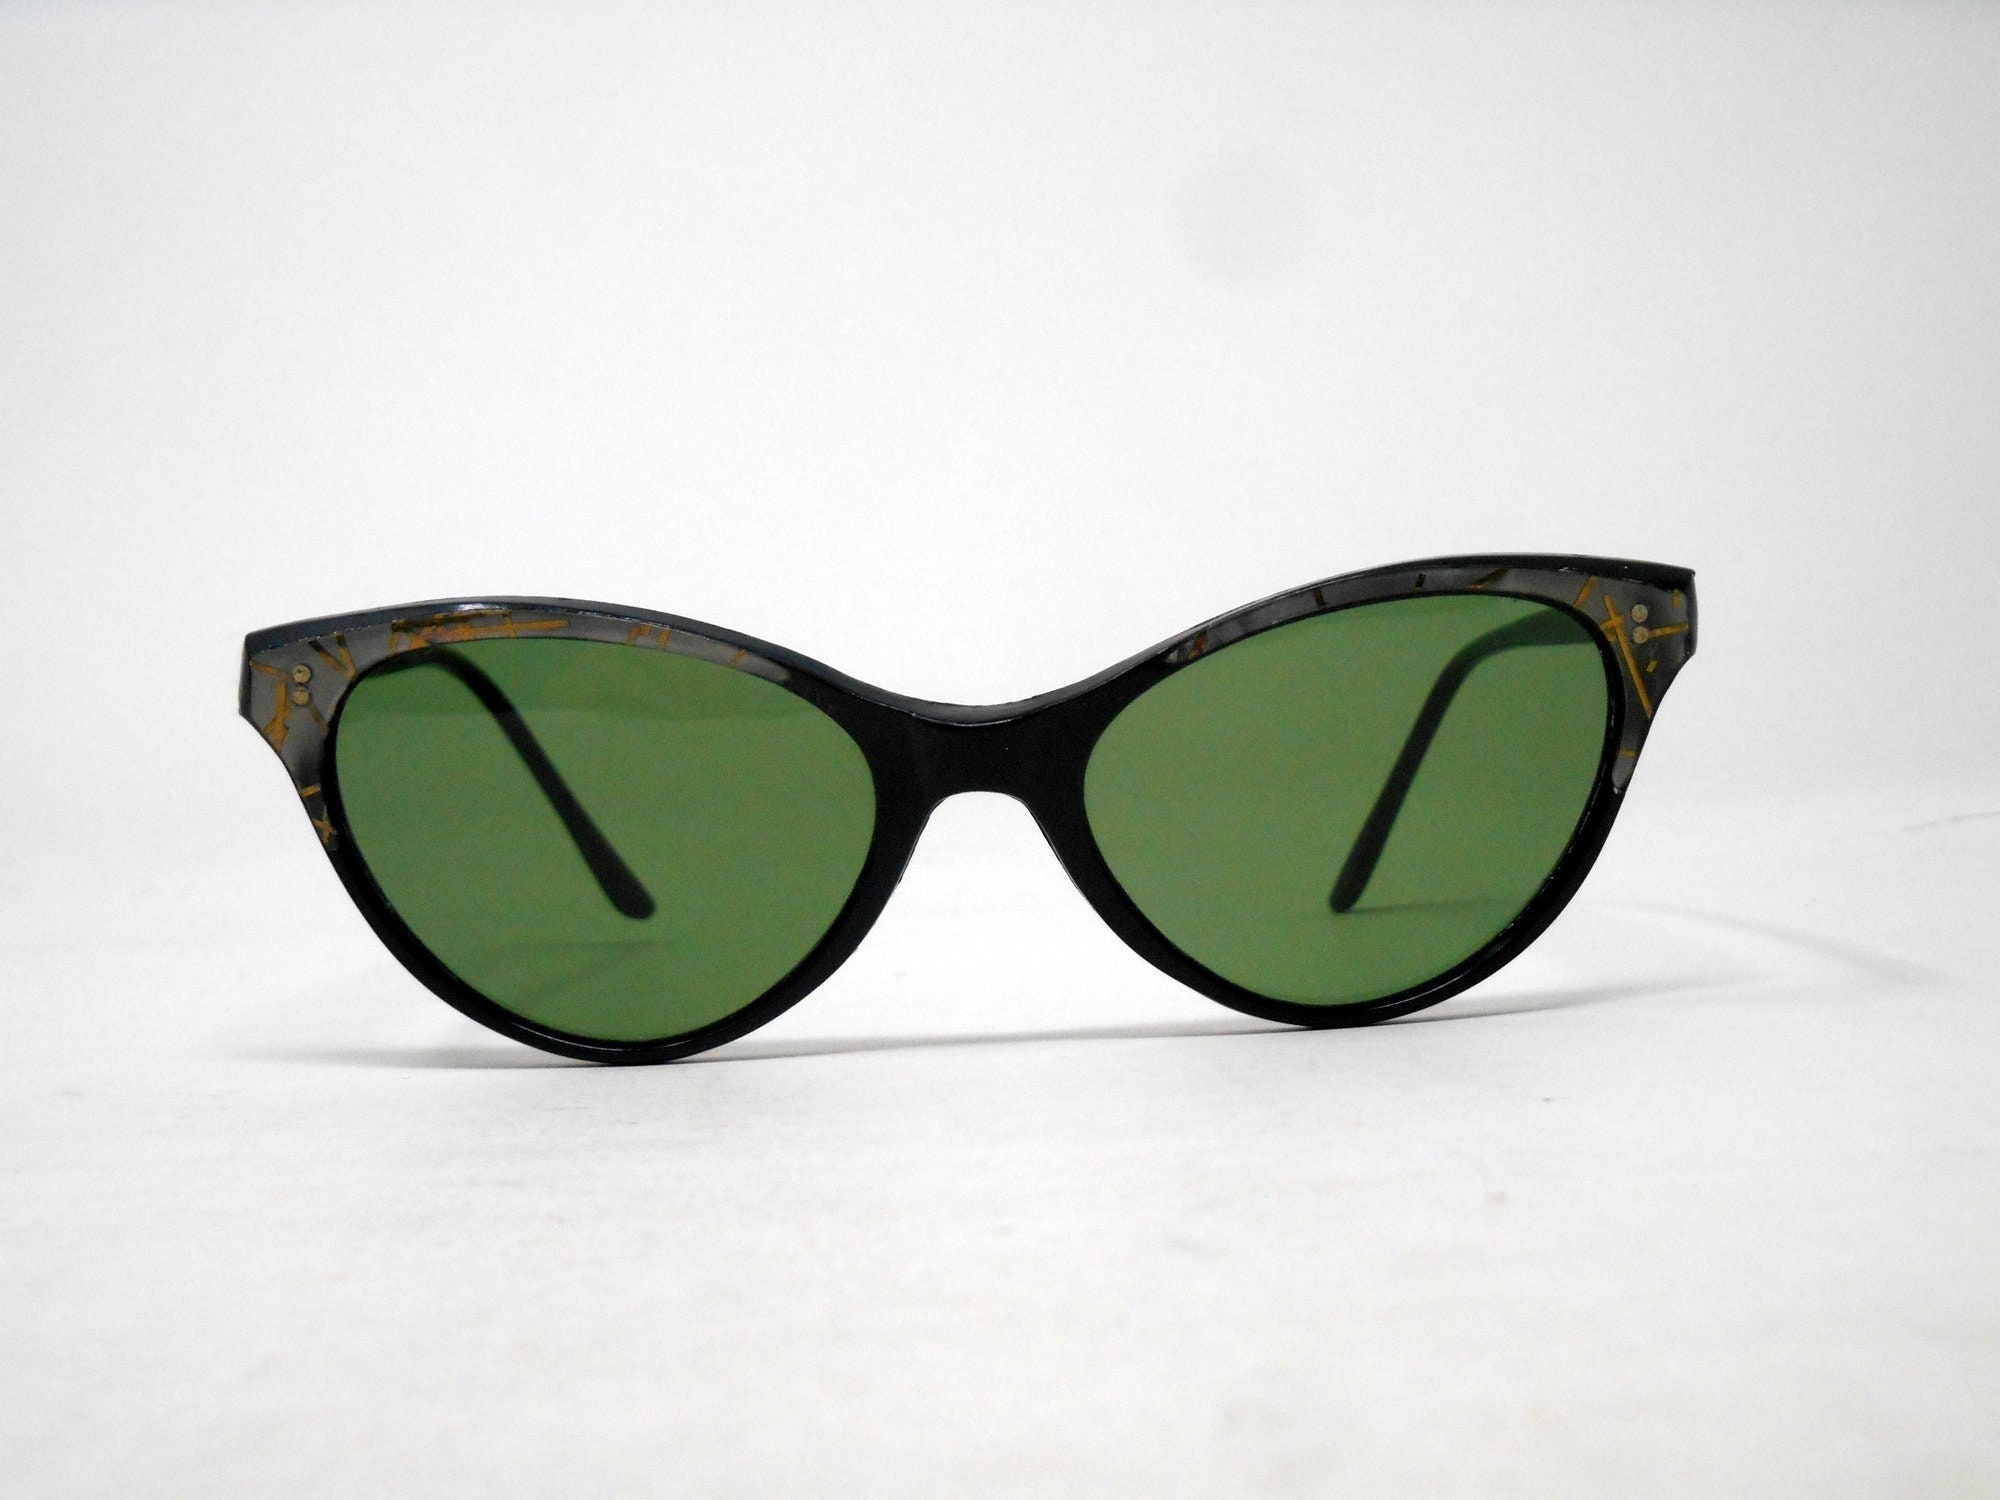 fabulous vintage sunglasses lunettes eyeglasses 1960 cat eye carved frame france rare